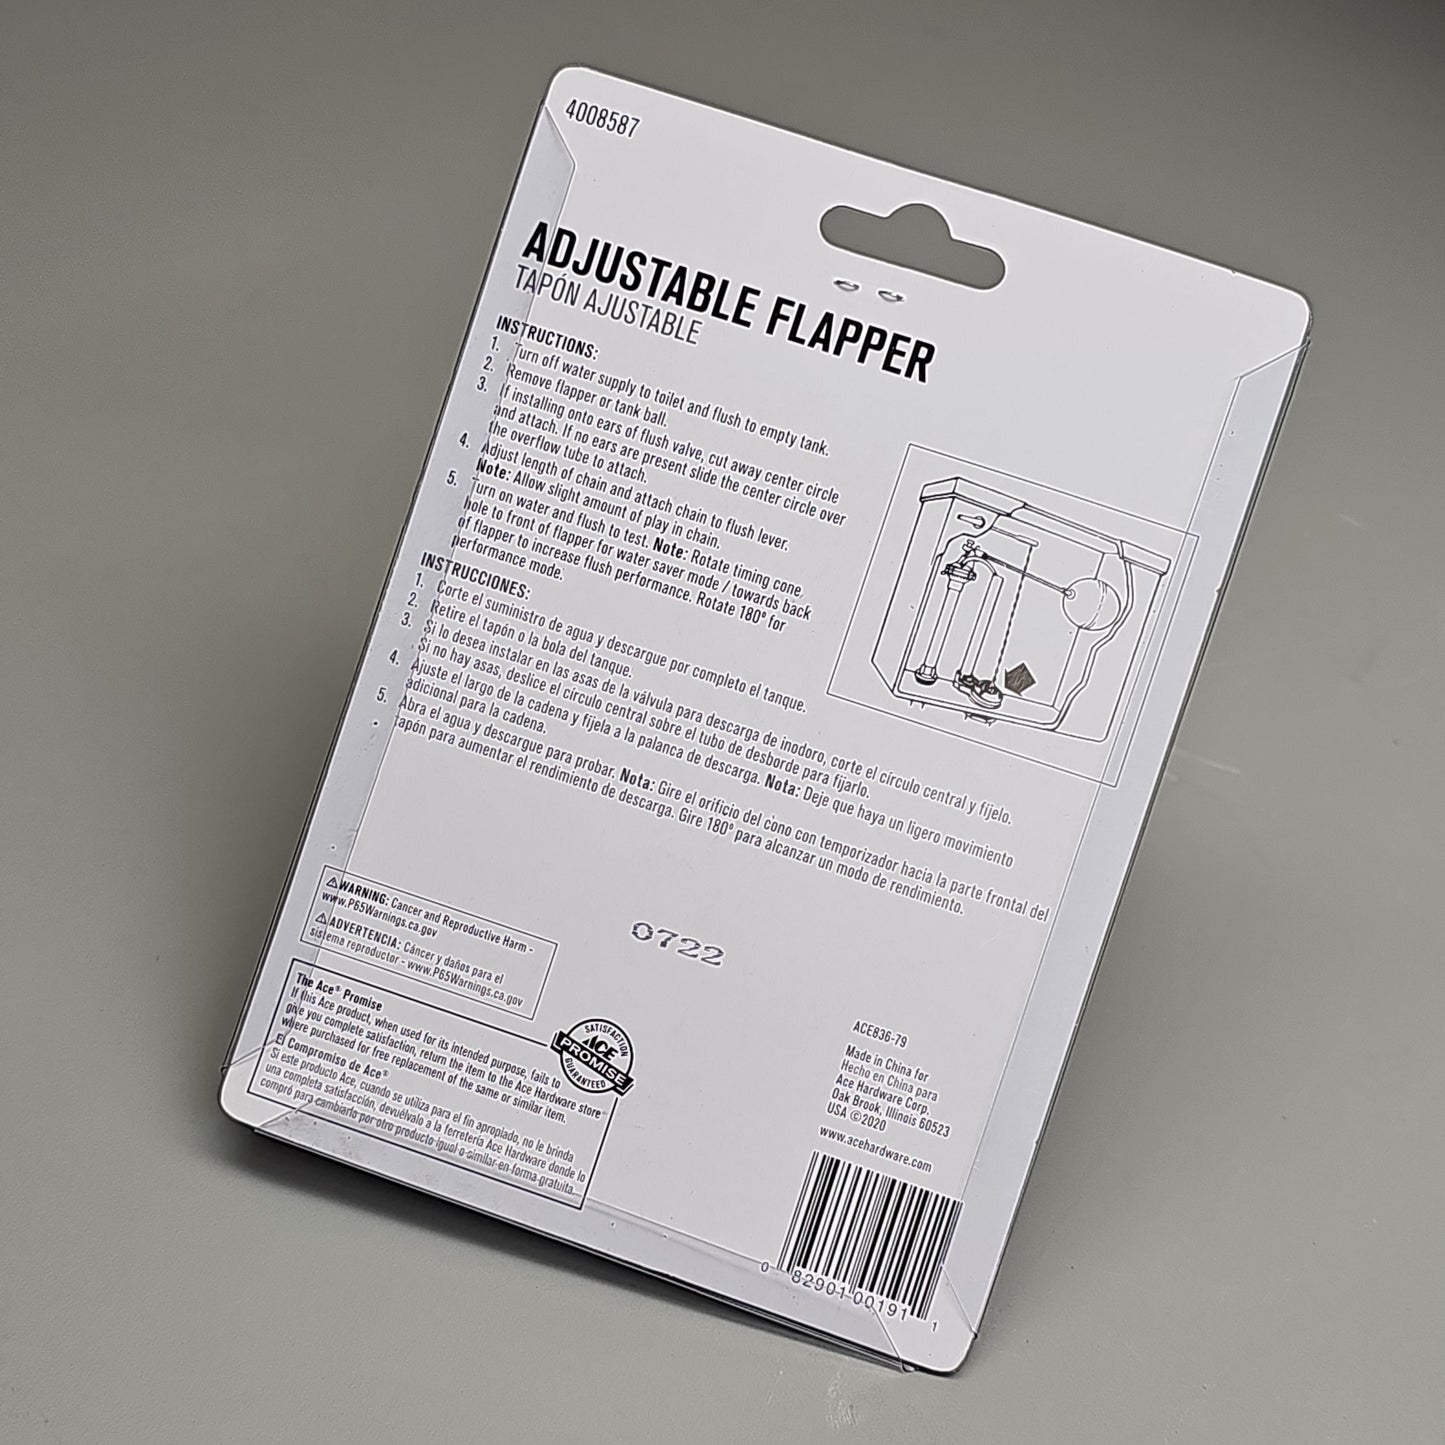 ACE Adjustable Flapper for Toilet Plastic 2" 24-Pk ACE836-79 4008587 (New)